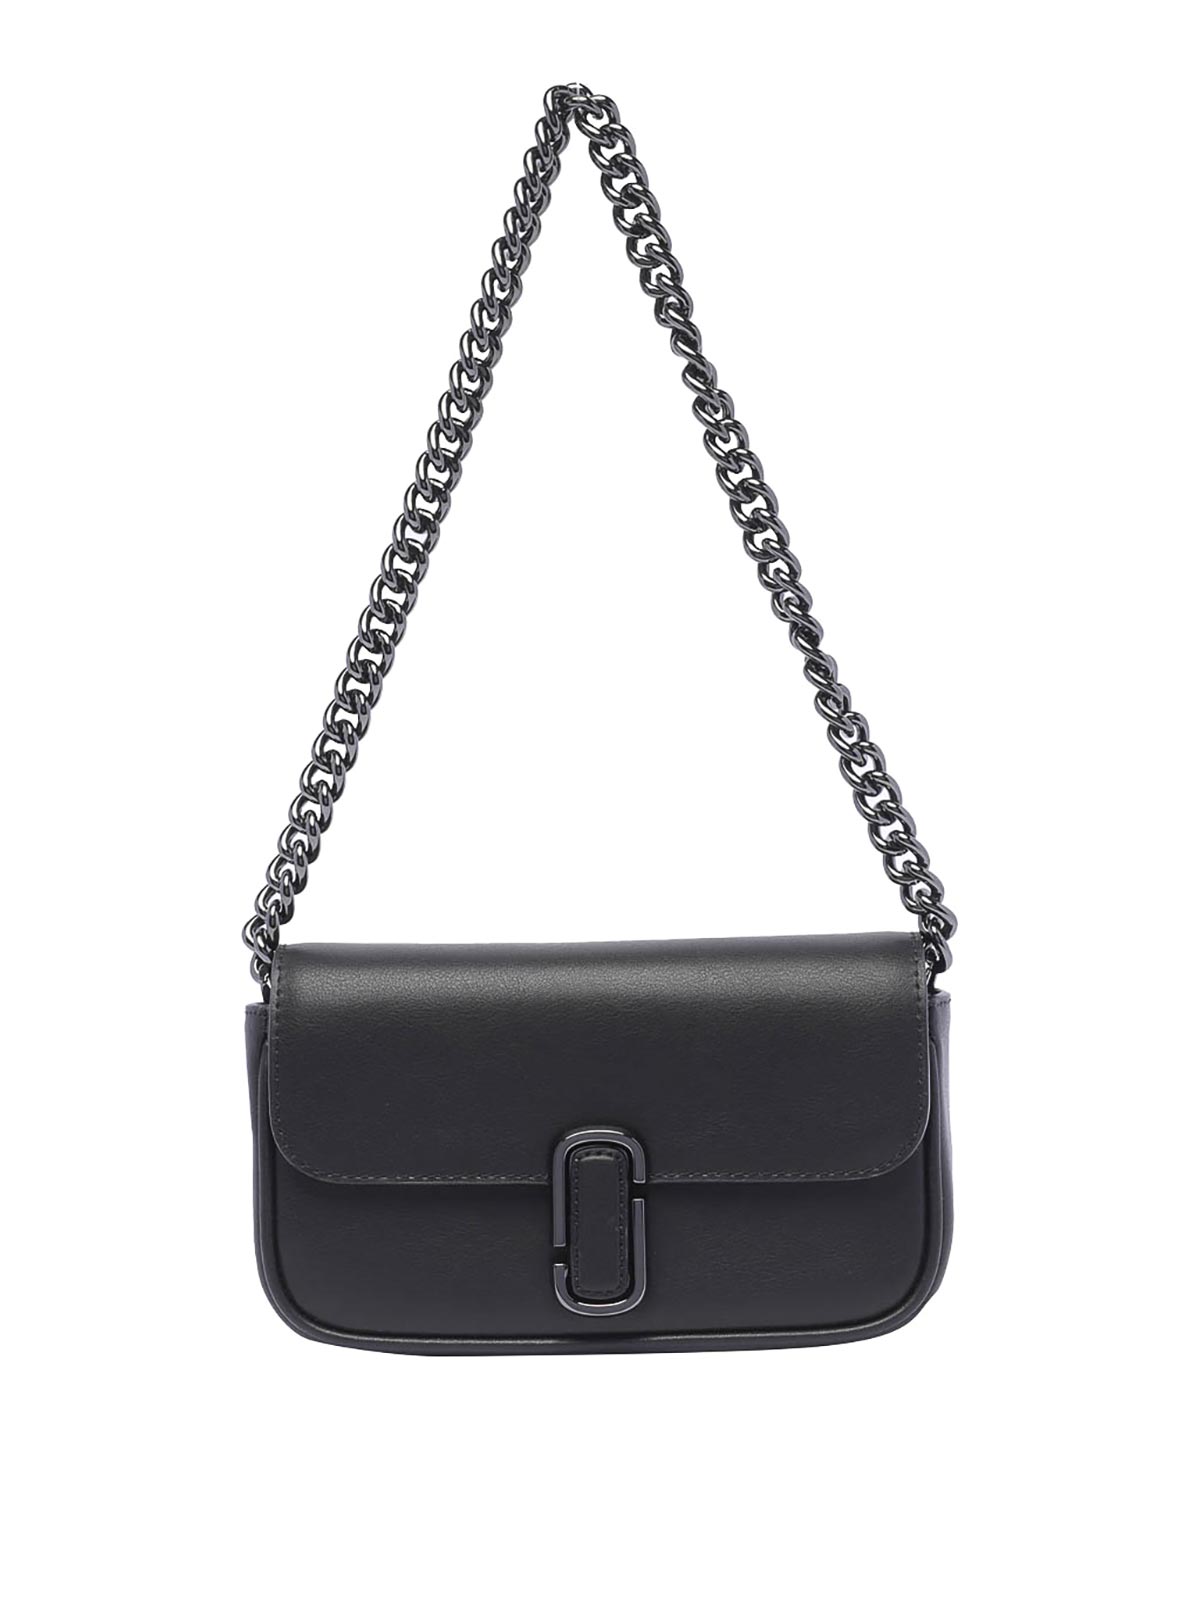 Marc Jacobs The Mini Bag In Black